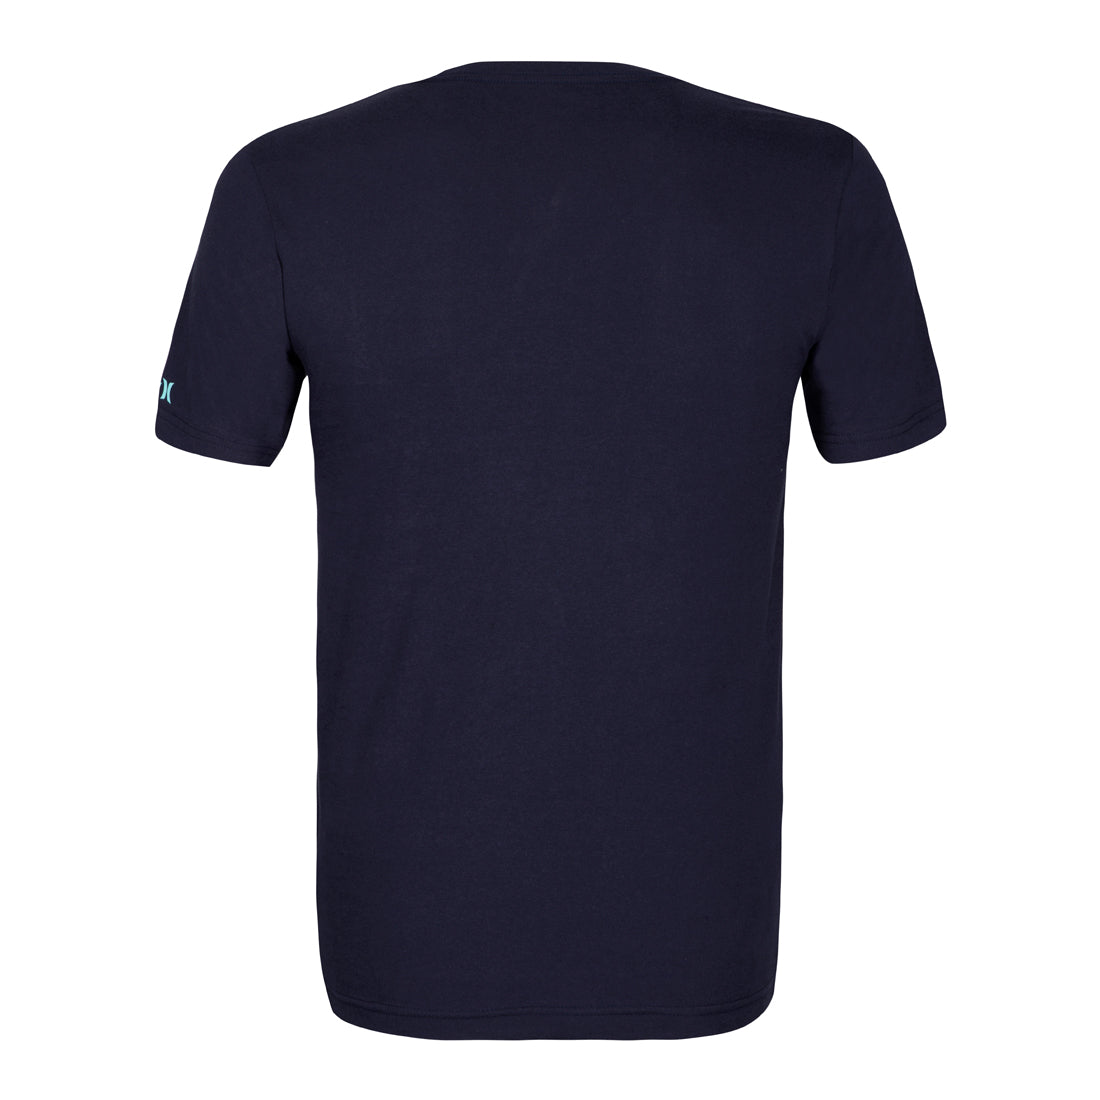 Hurley Navy Blue Jersey Logo T-Shirt T Shirt Hurley   